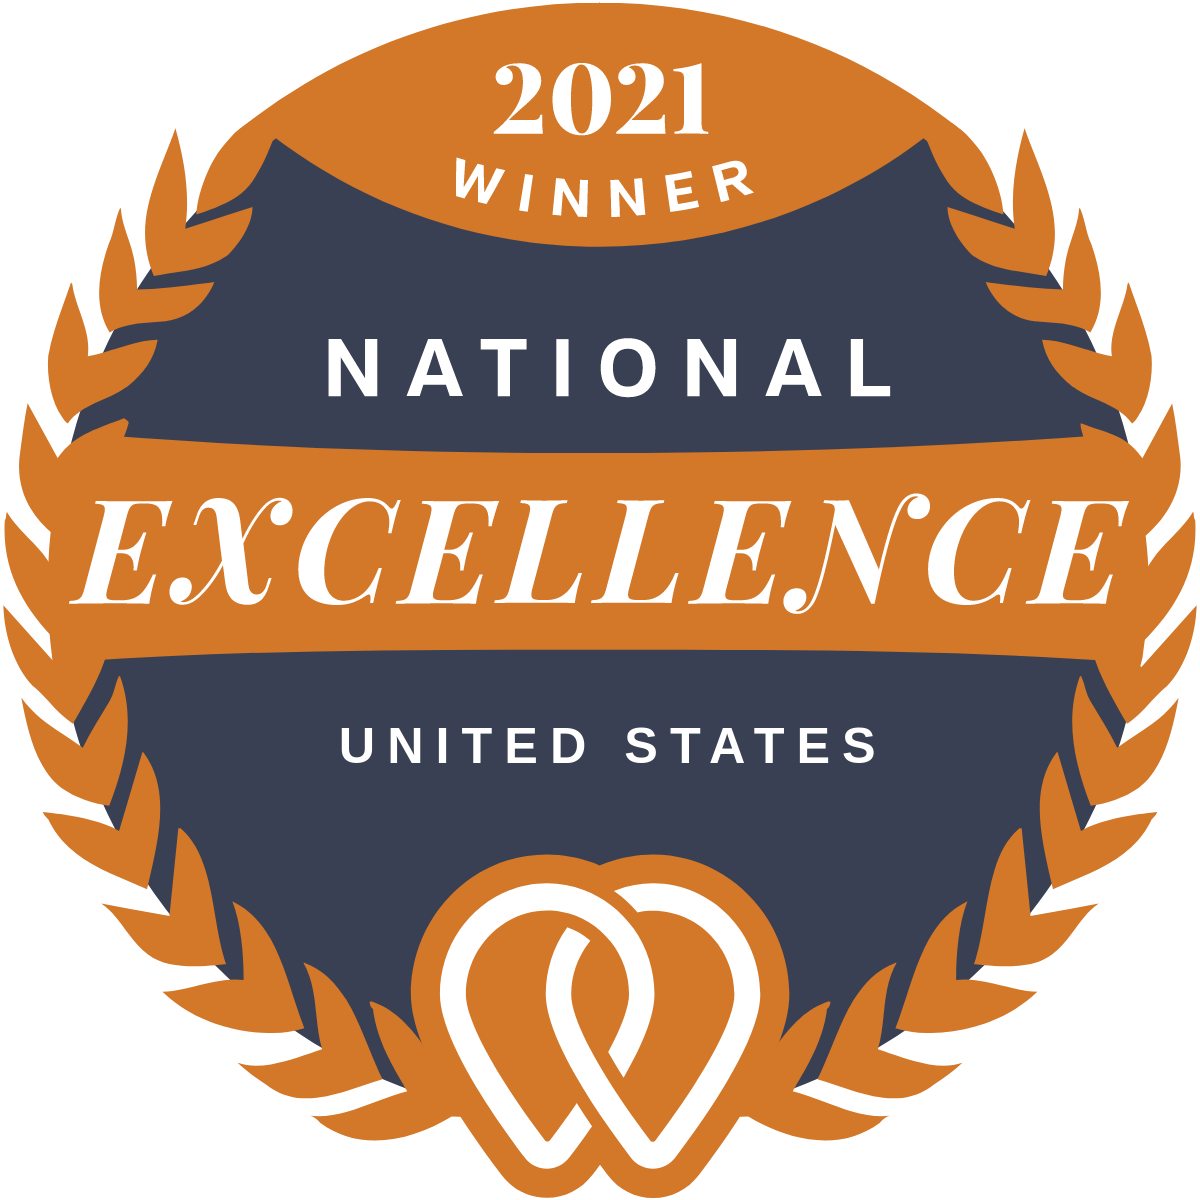 Upcity National Excellence award - C7 Creative Jacksonville, Florida